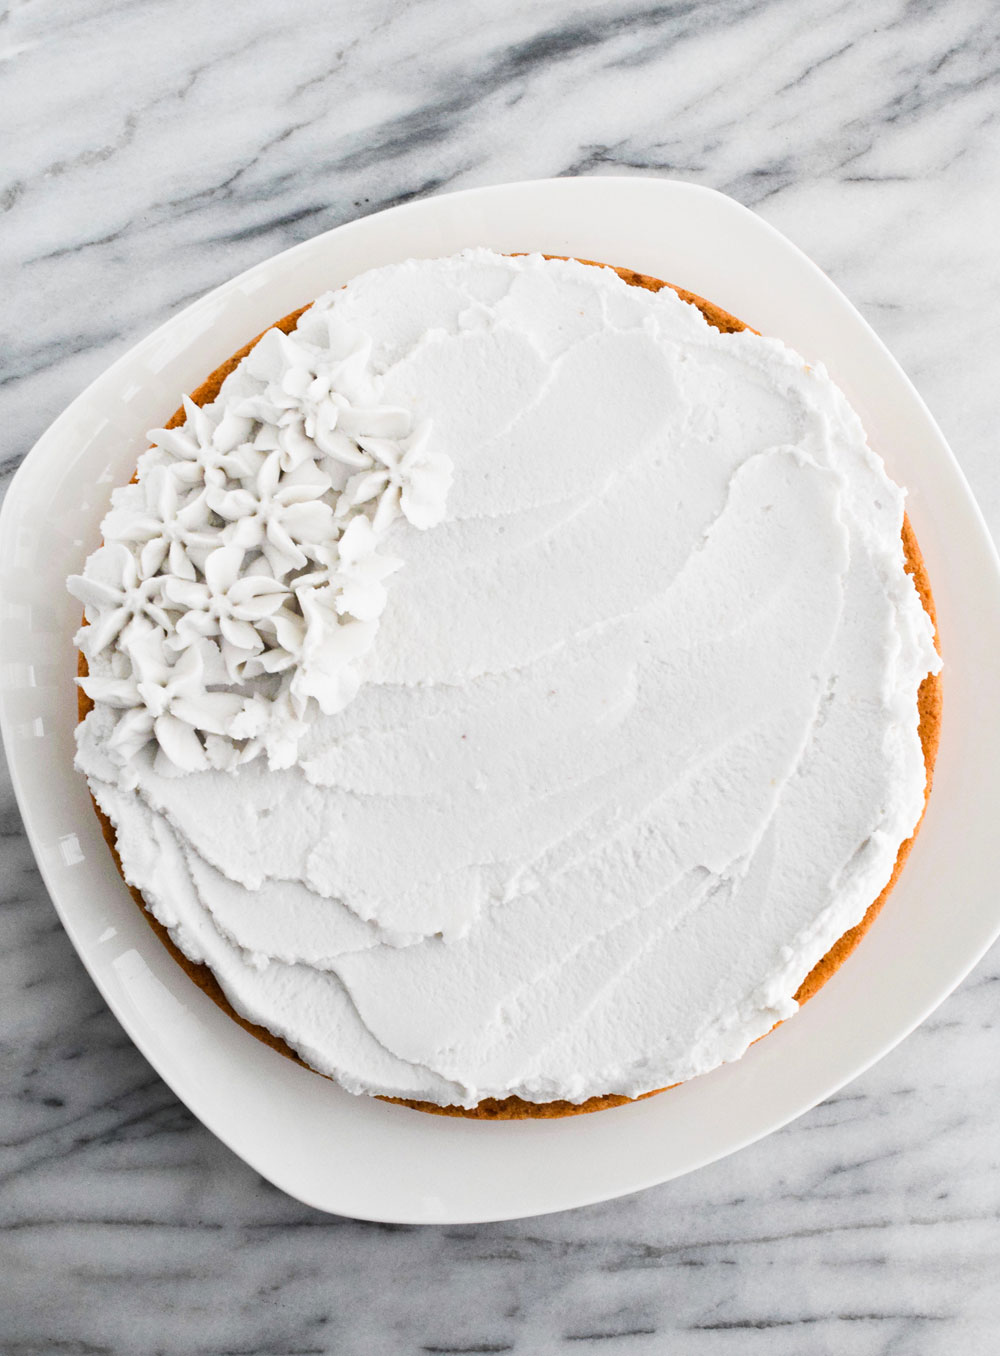 Vegan Vanilla Cake with Whipped Cream Frosting